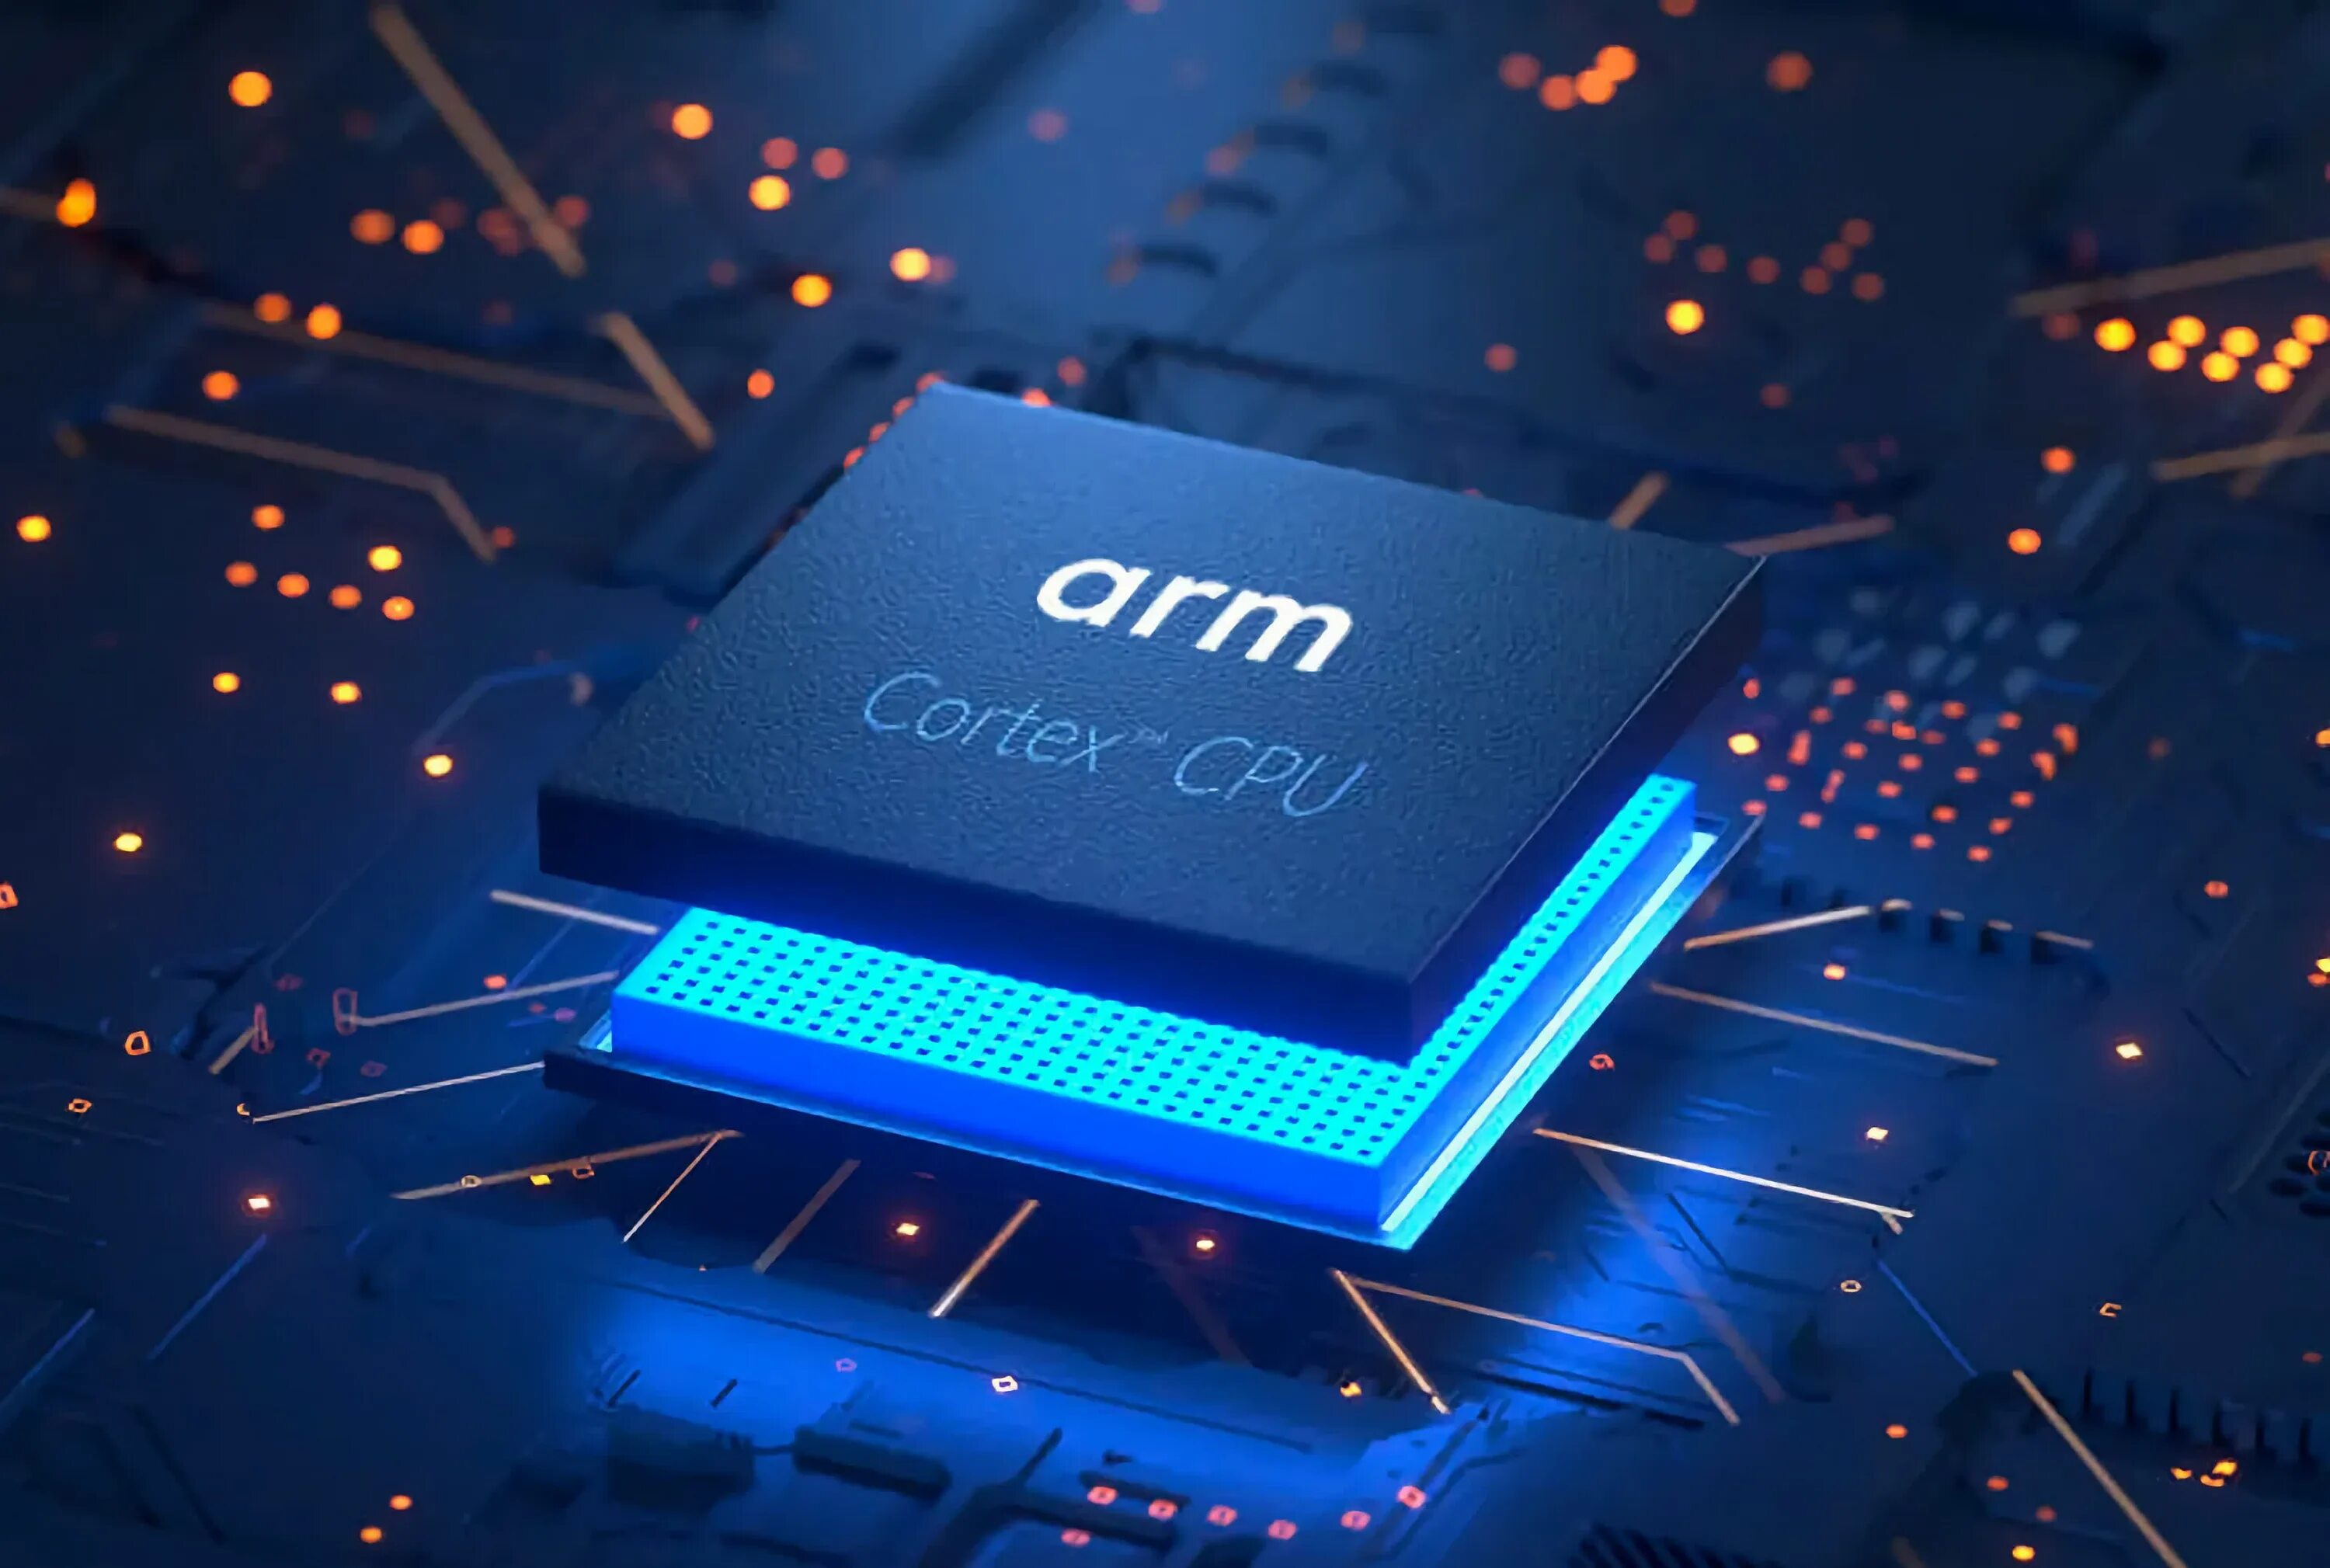 Architecture arm64. Cortex a53 архитектура процессора. Arm (Arm Limited) микропроцессор. Процессоры для смартфонов 2022. Arm архитектура.